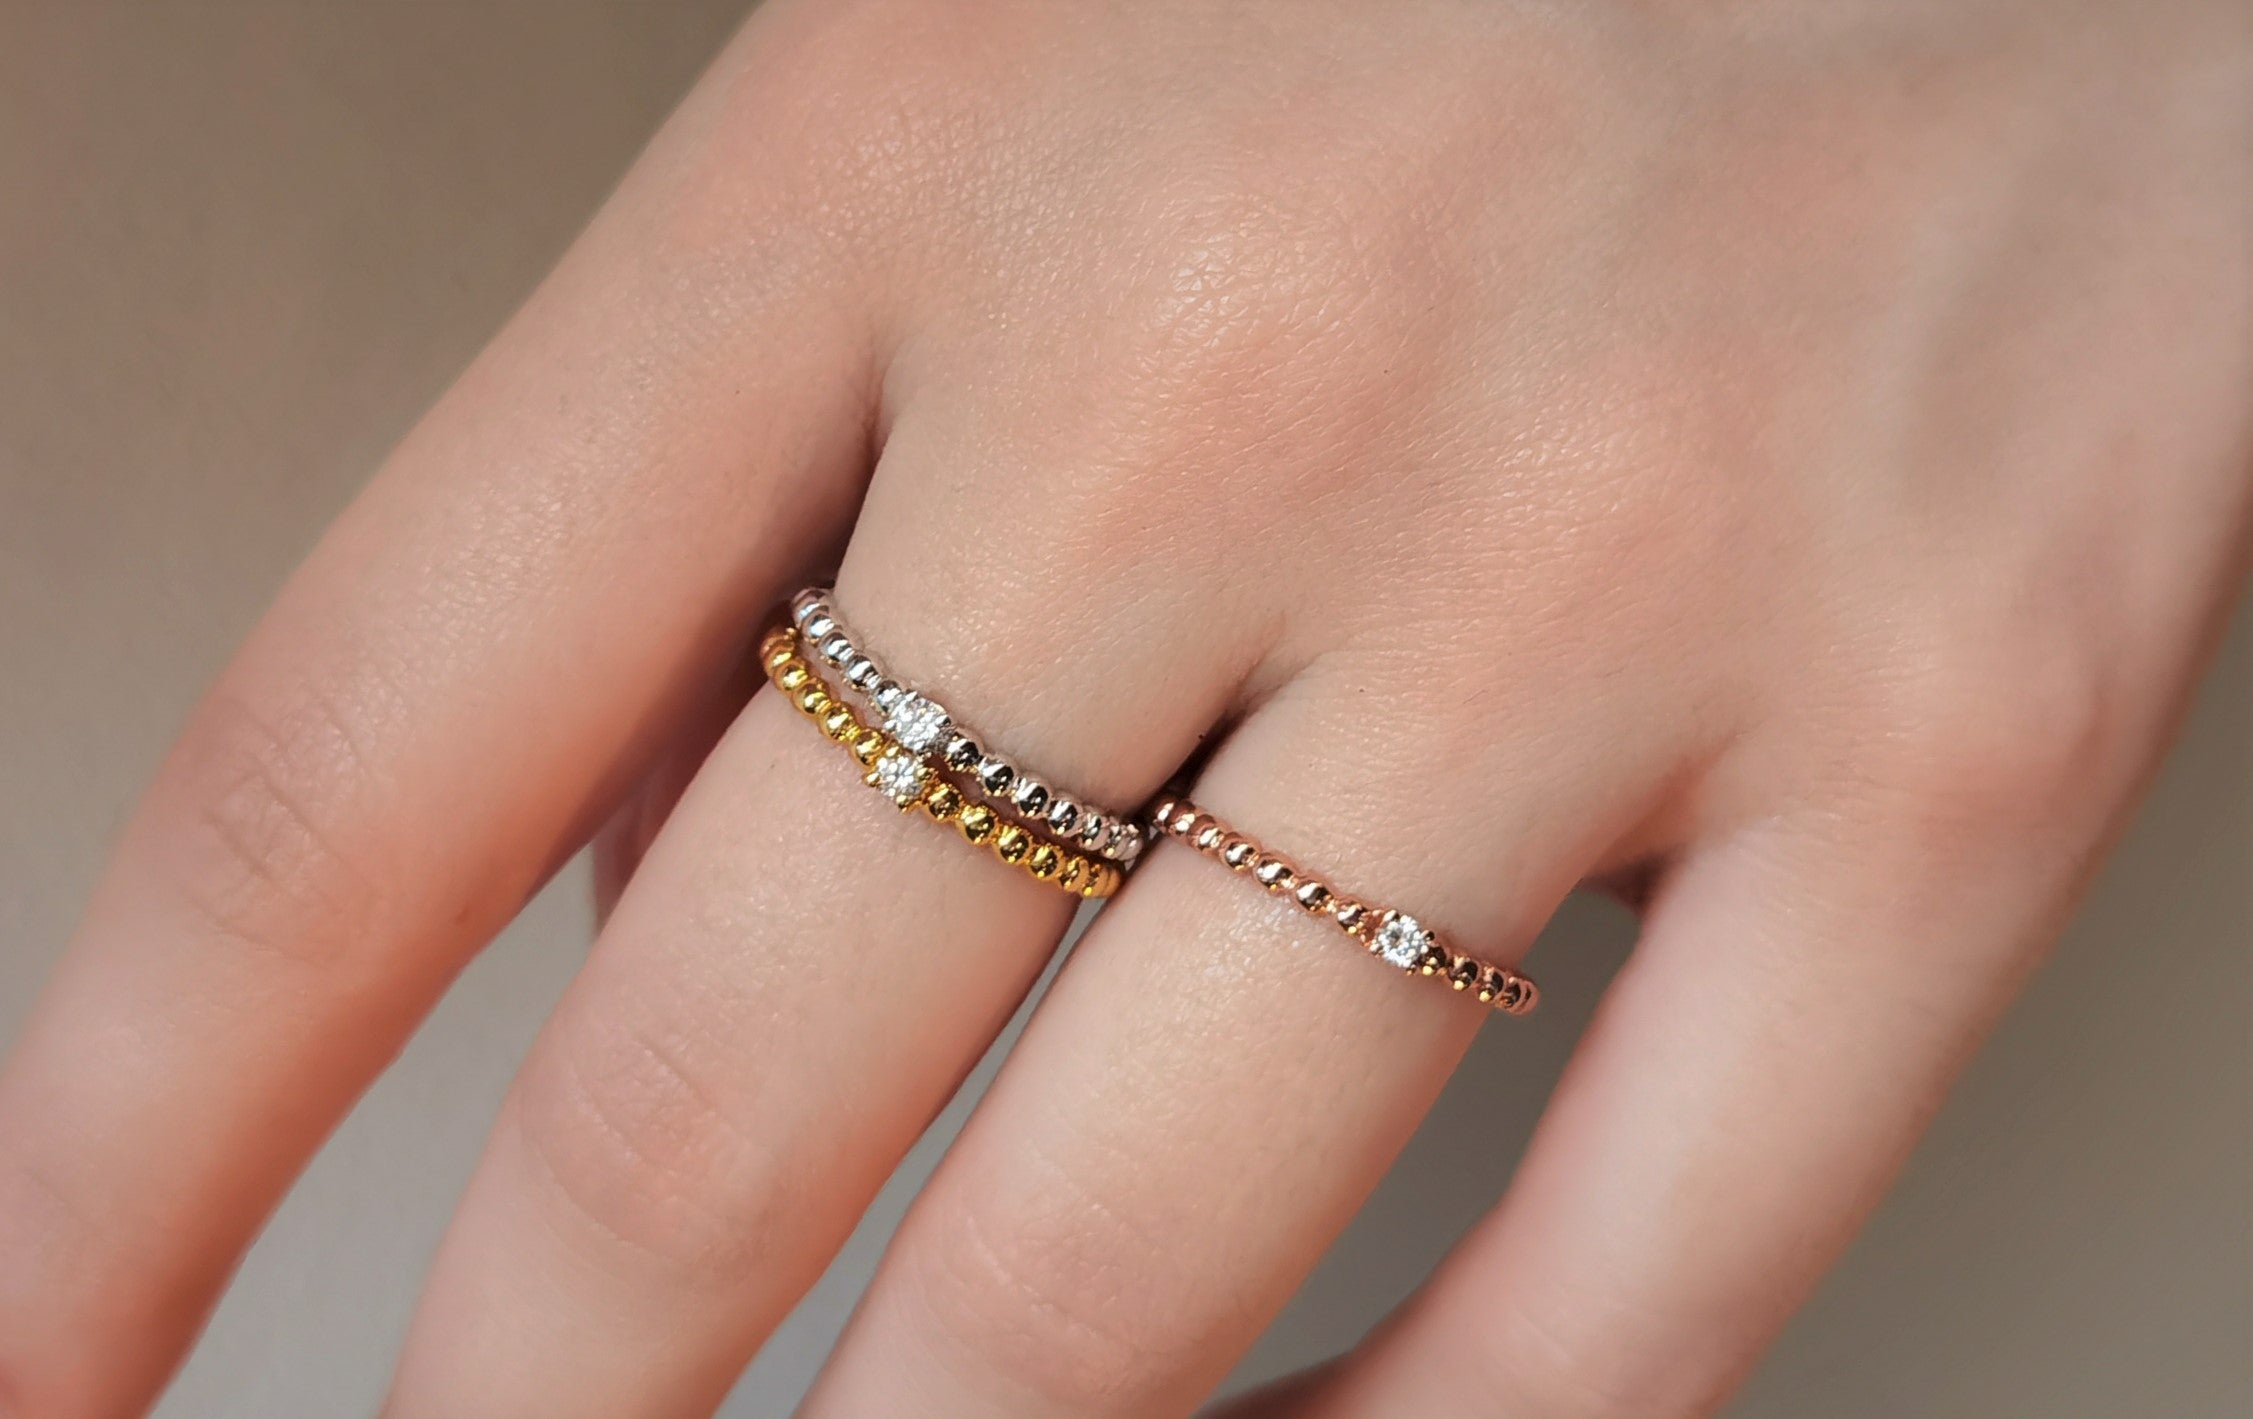 Kyra rose gold and diamond ring